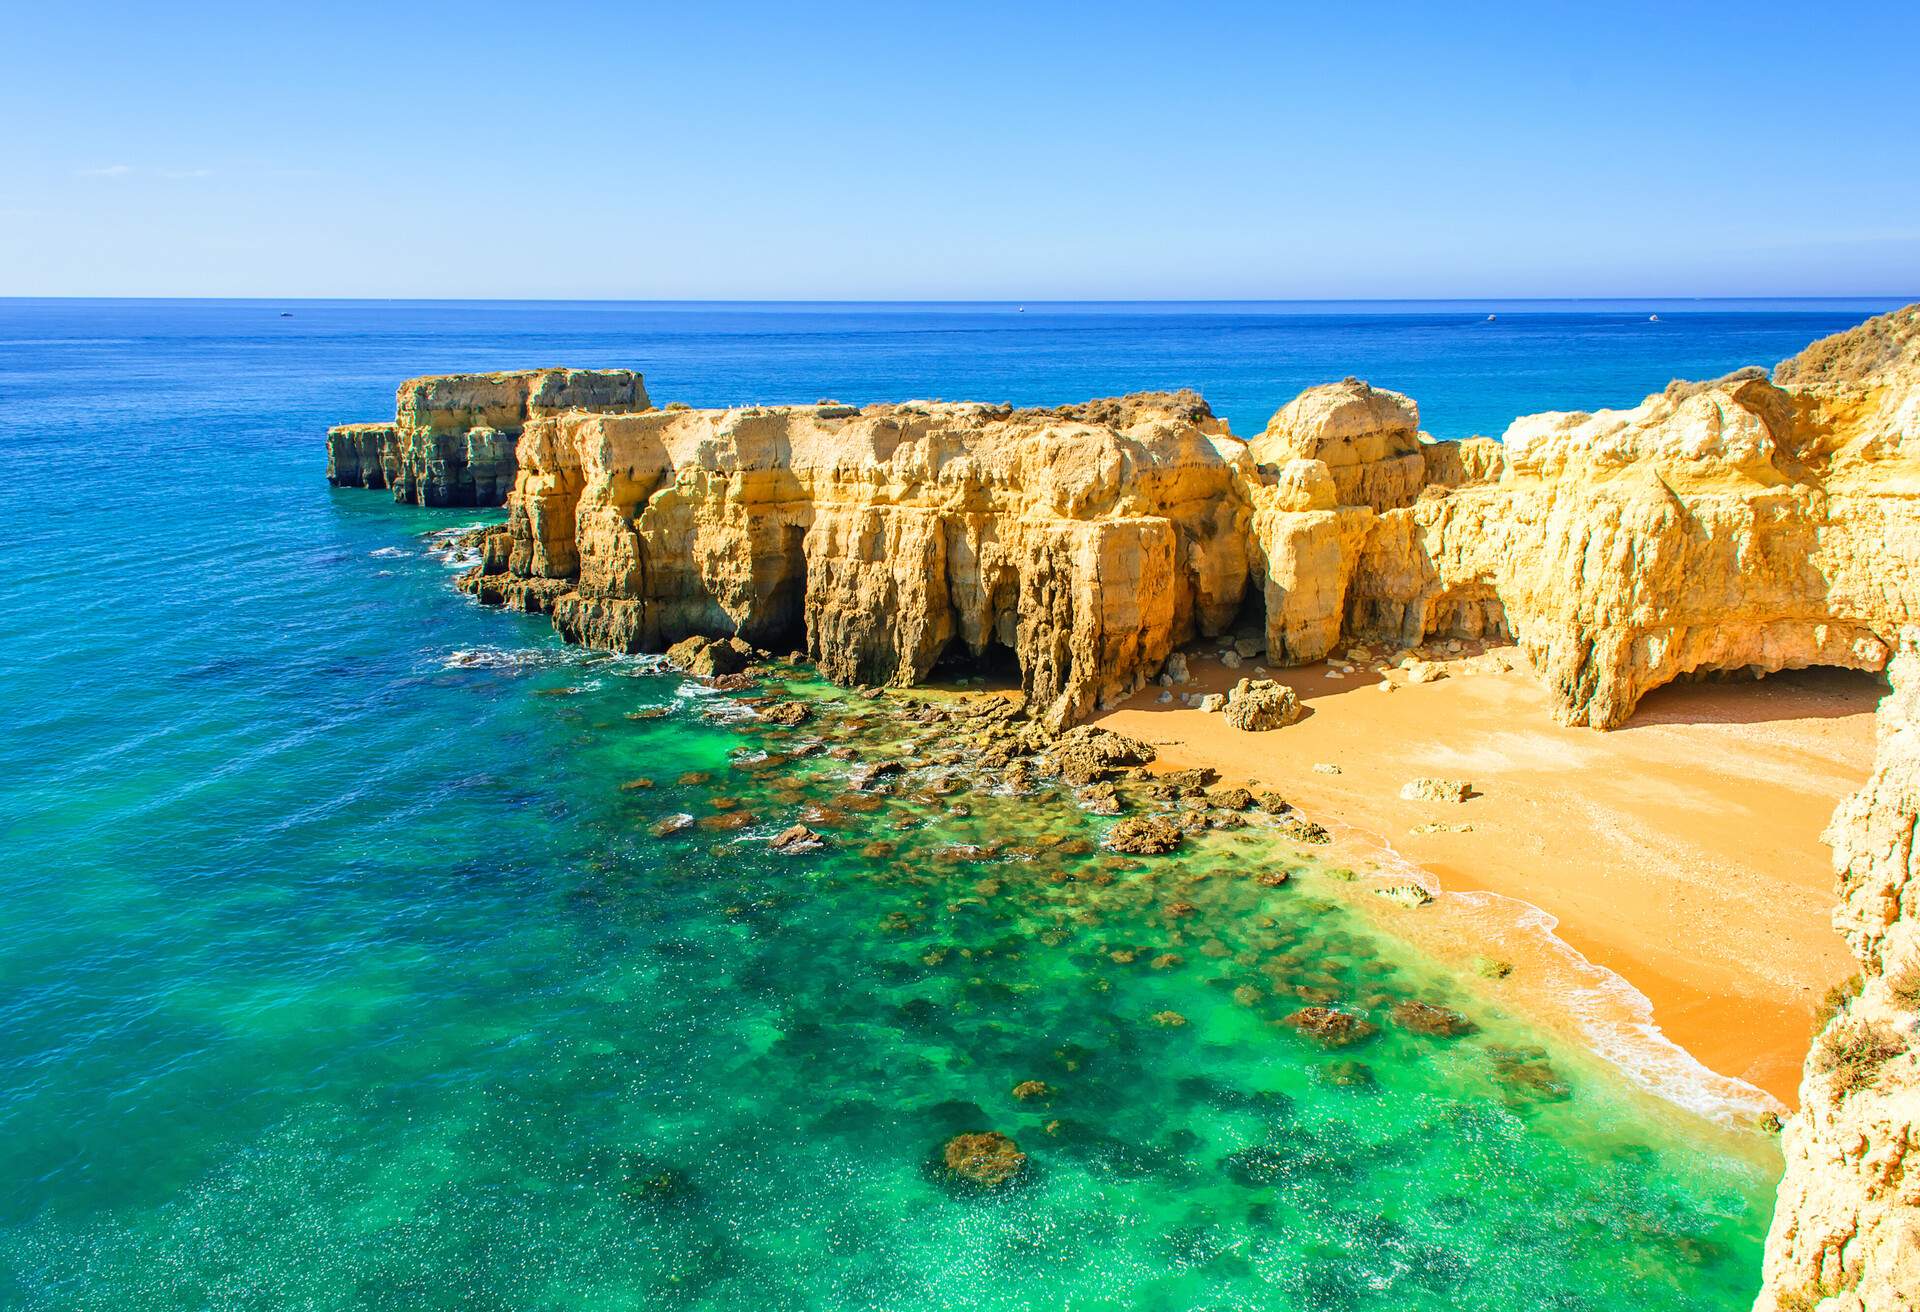 beautiful sea view with secret sandy beach among rocks and cliffs near Albufeira in Algarve, Portugal; Shutterstock ID 608838695